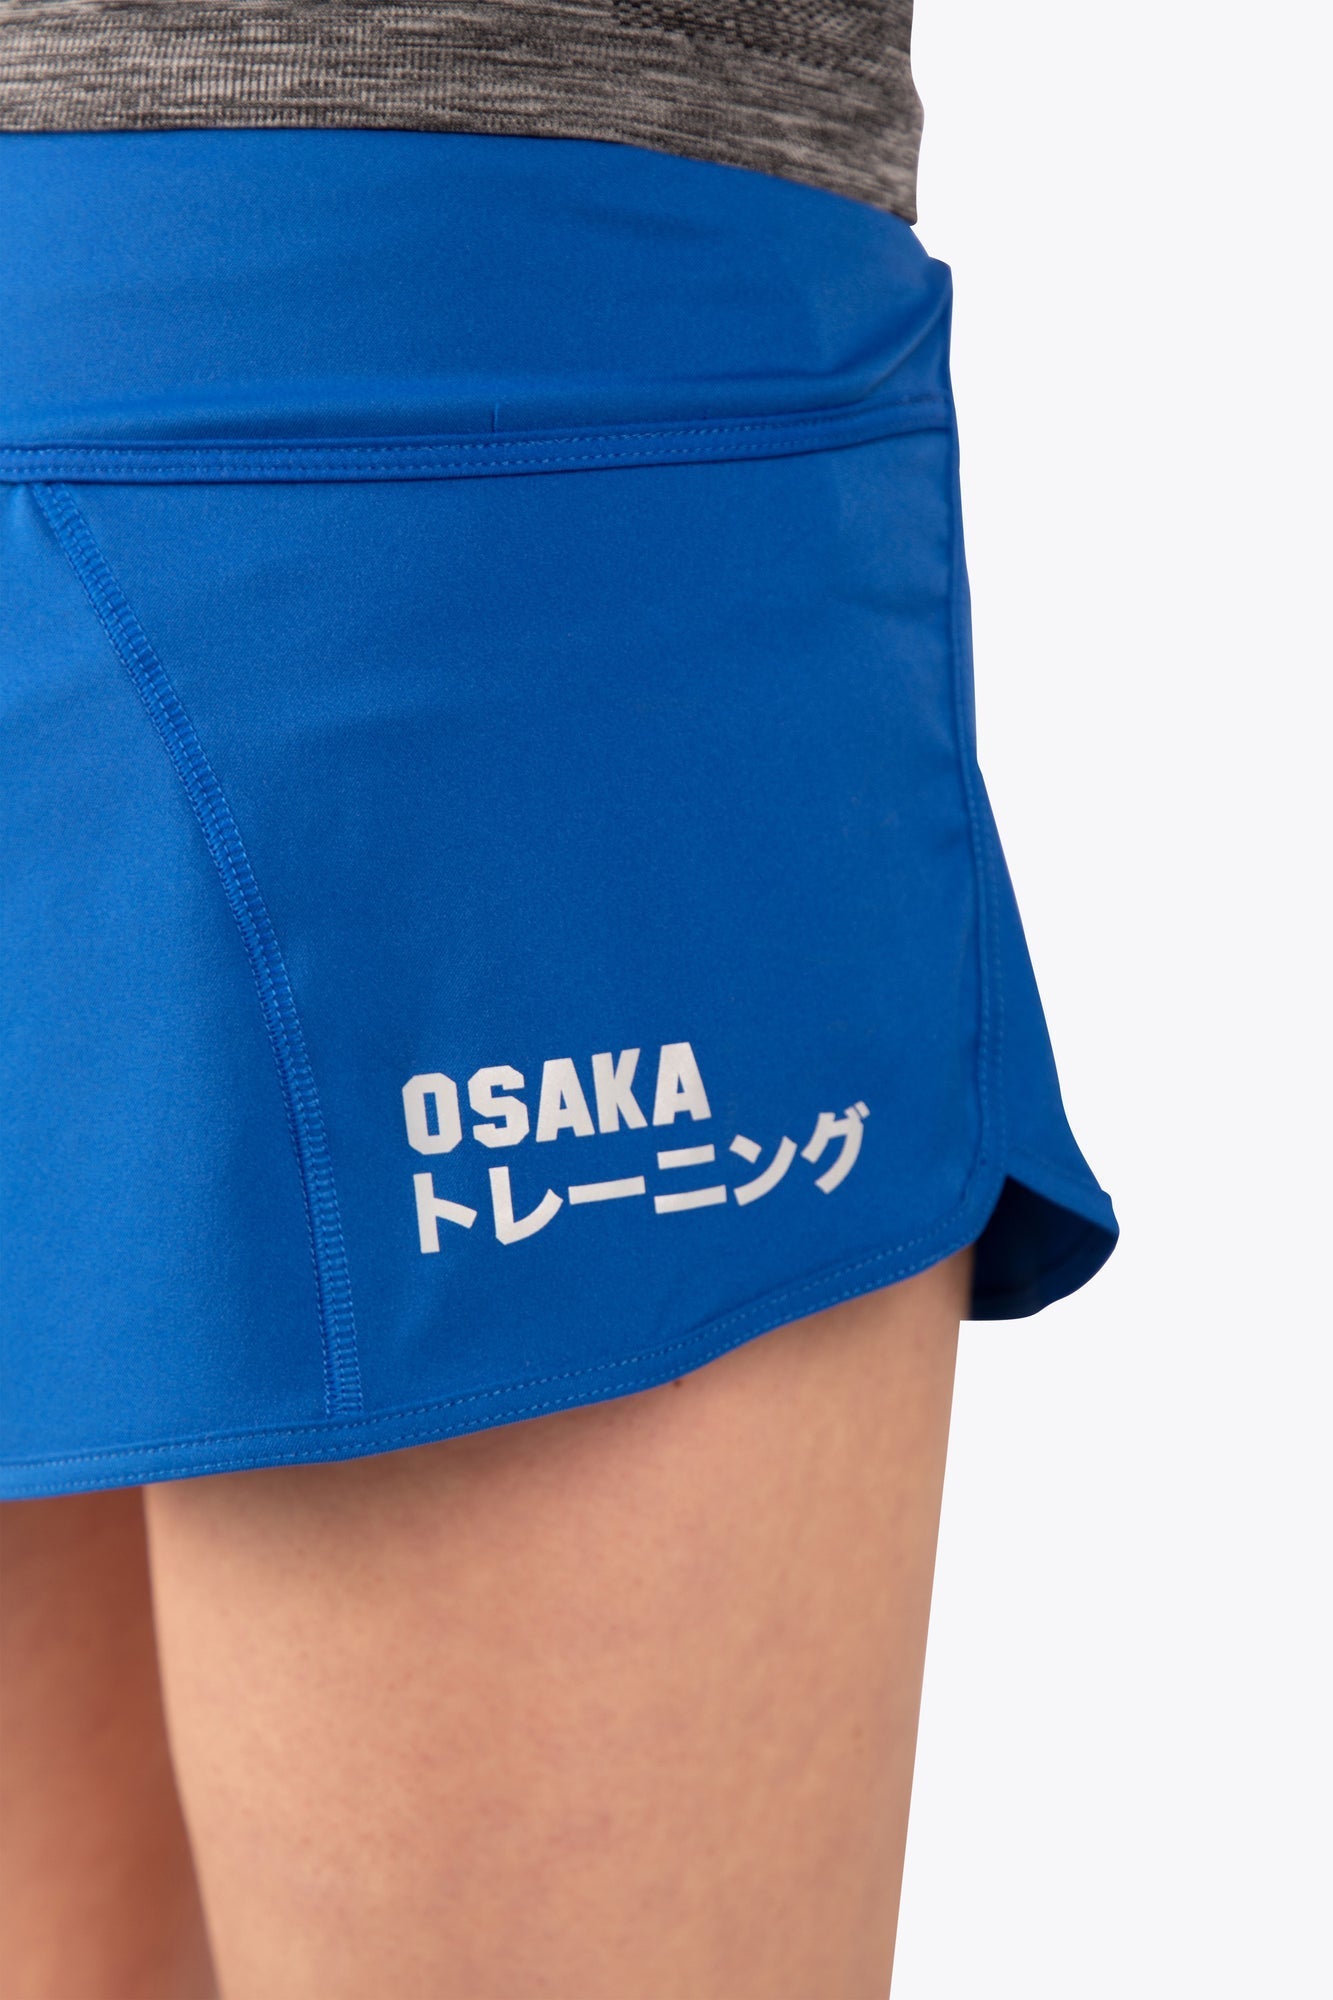 Osaka Women's Training Short (Royal Blue)